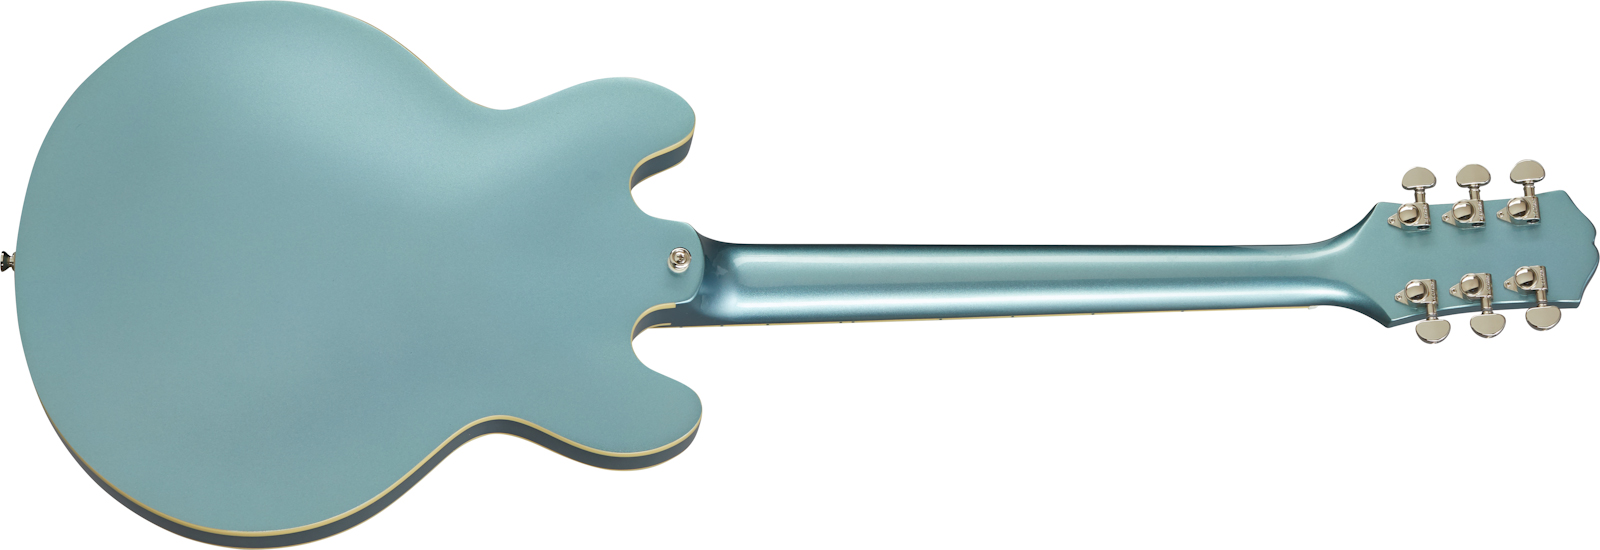 Epiphone Es-339 Inspired By Gibson 2020 2h Ht Rw - Pelham Blue - Semi-Hollow E-Gitarre - Variation 1